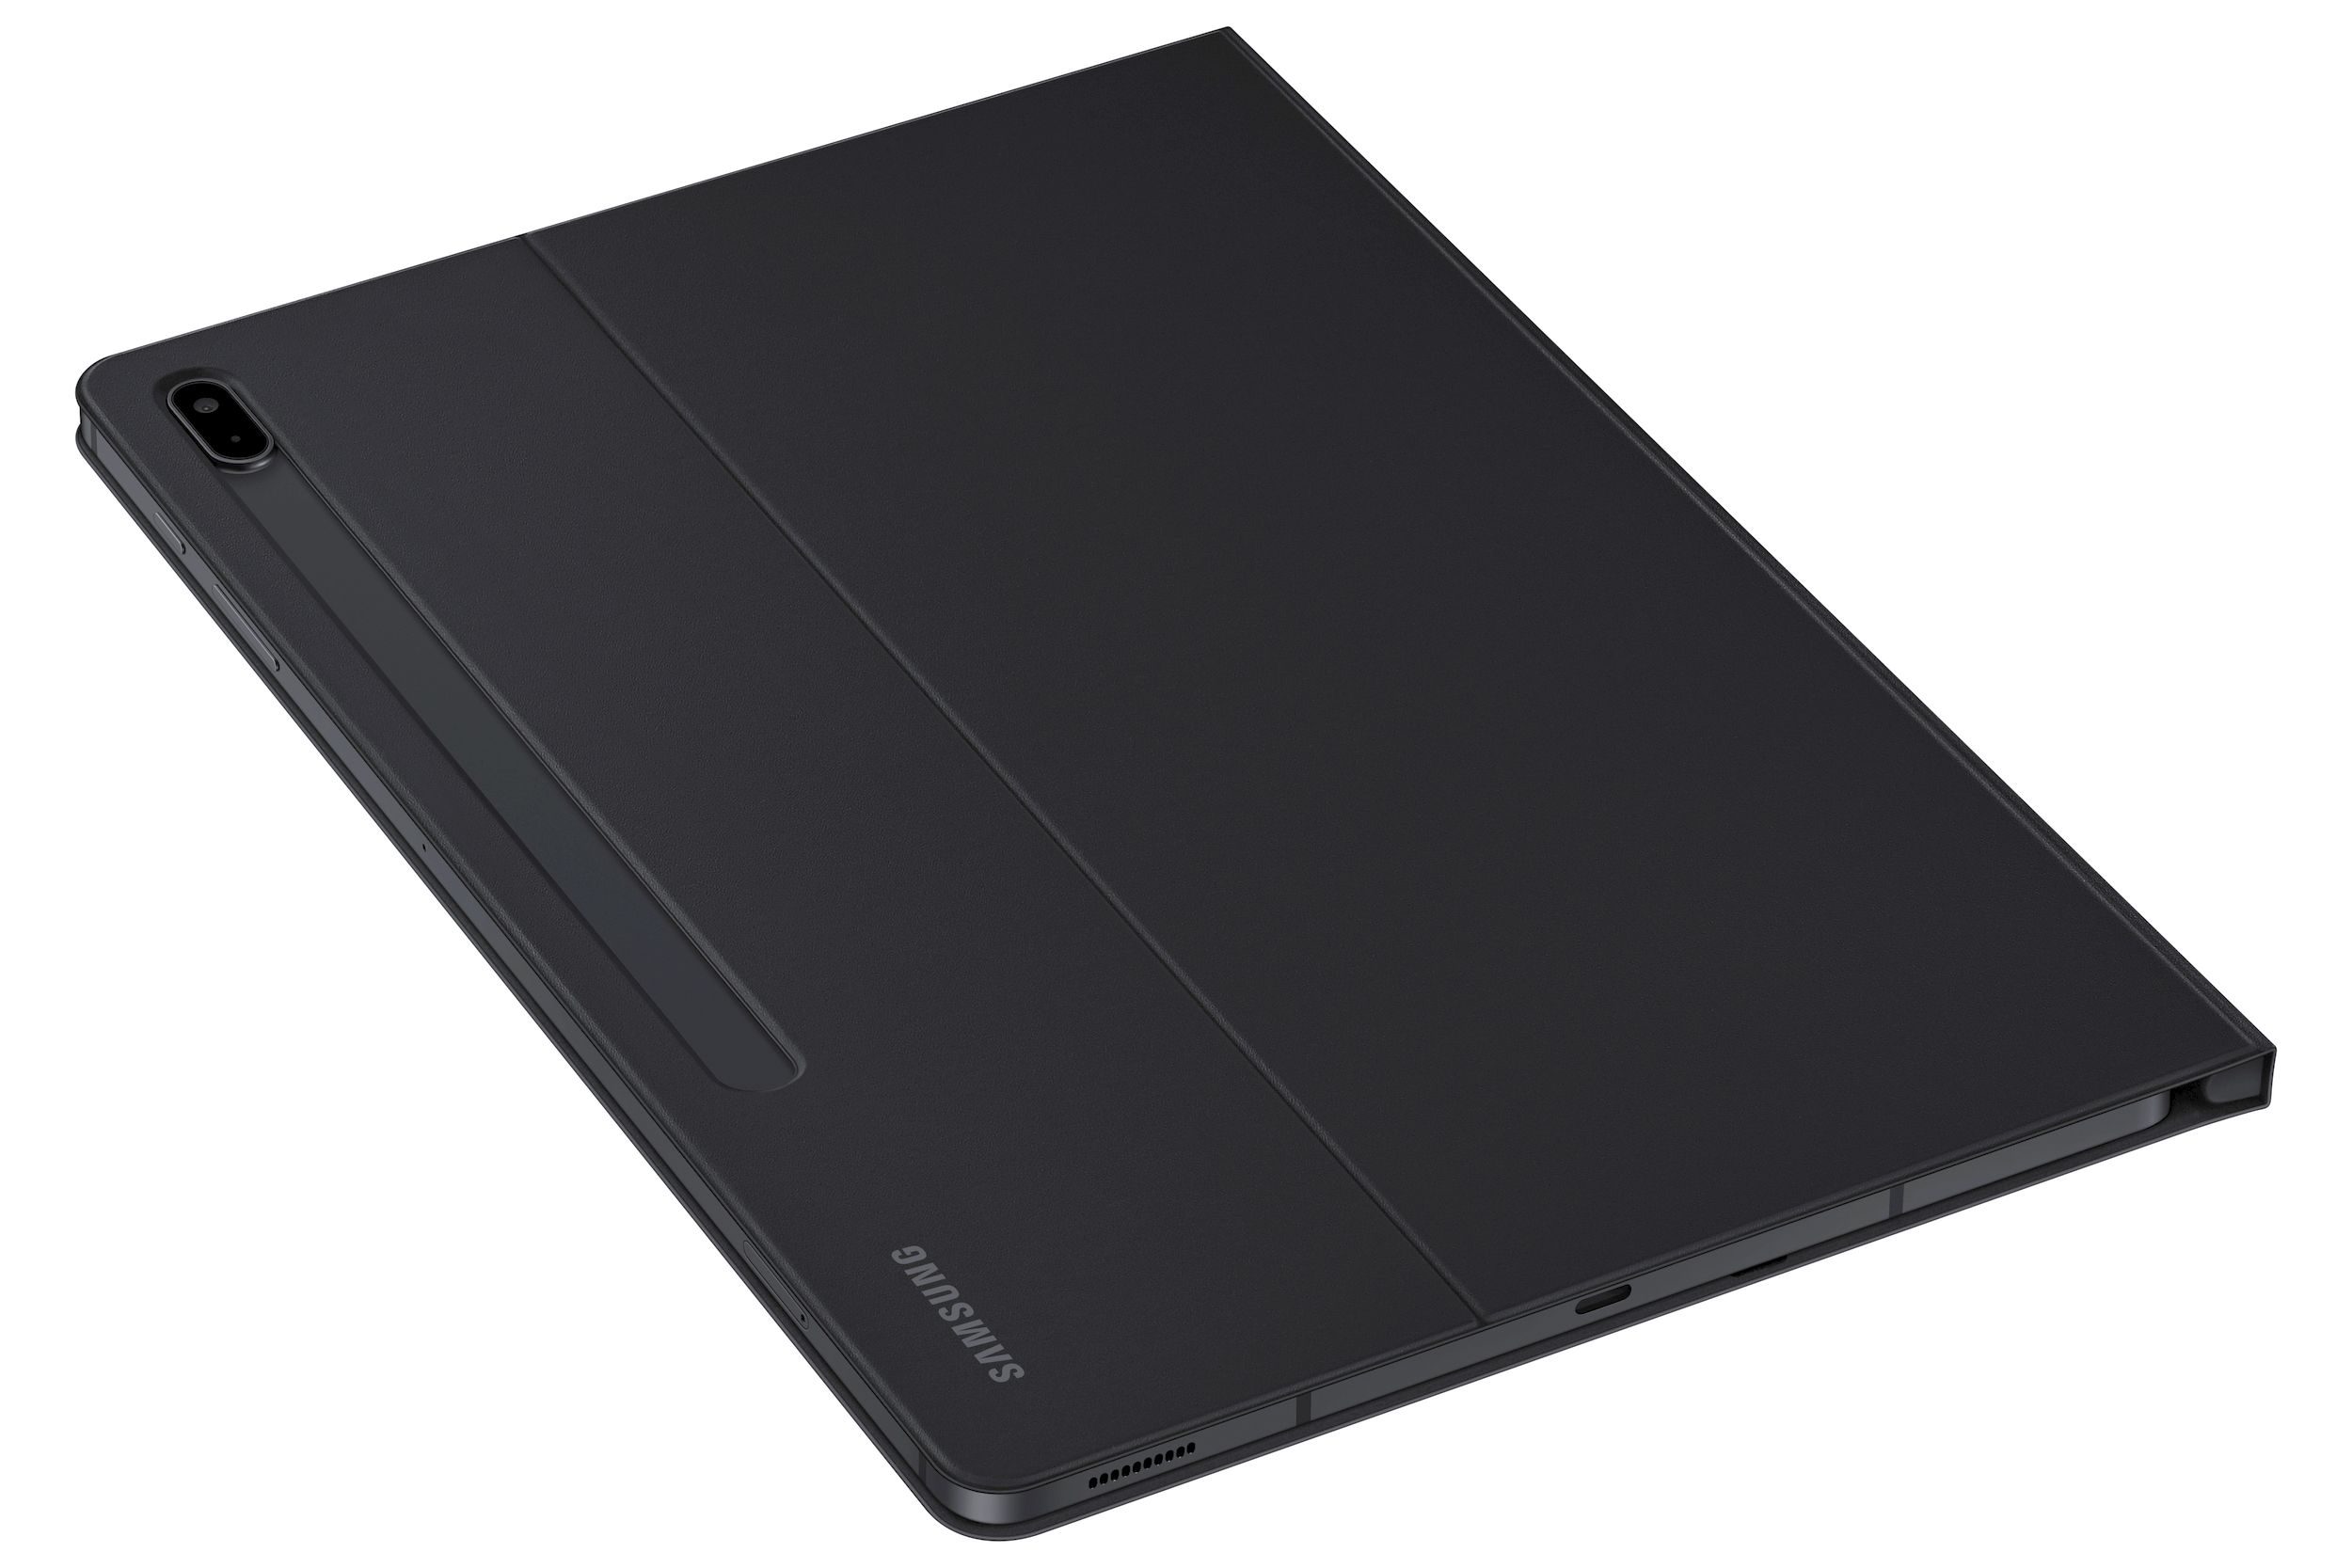  Samsung Galaxy Tab S7+ Lite в четырёх новых цветах Samsung  - samsung_galaxy_tab_s7_lite_vo_vseh_cvetah_i_rakursah_na_press_foto_picture6_2